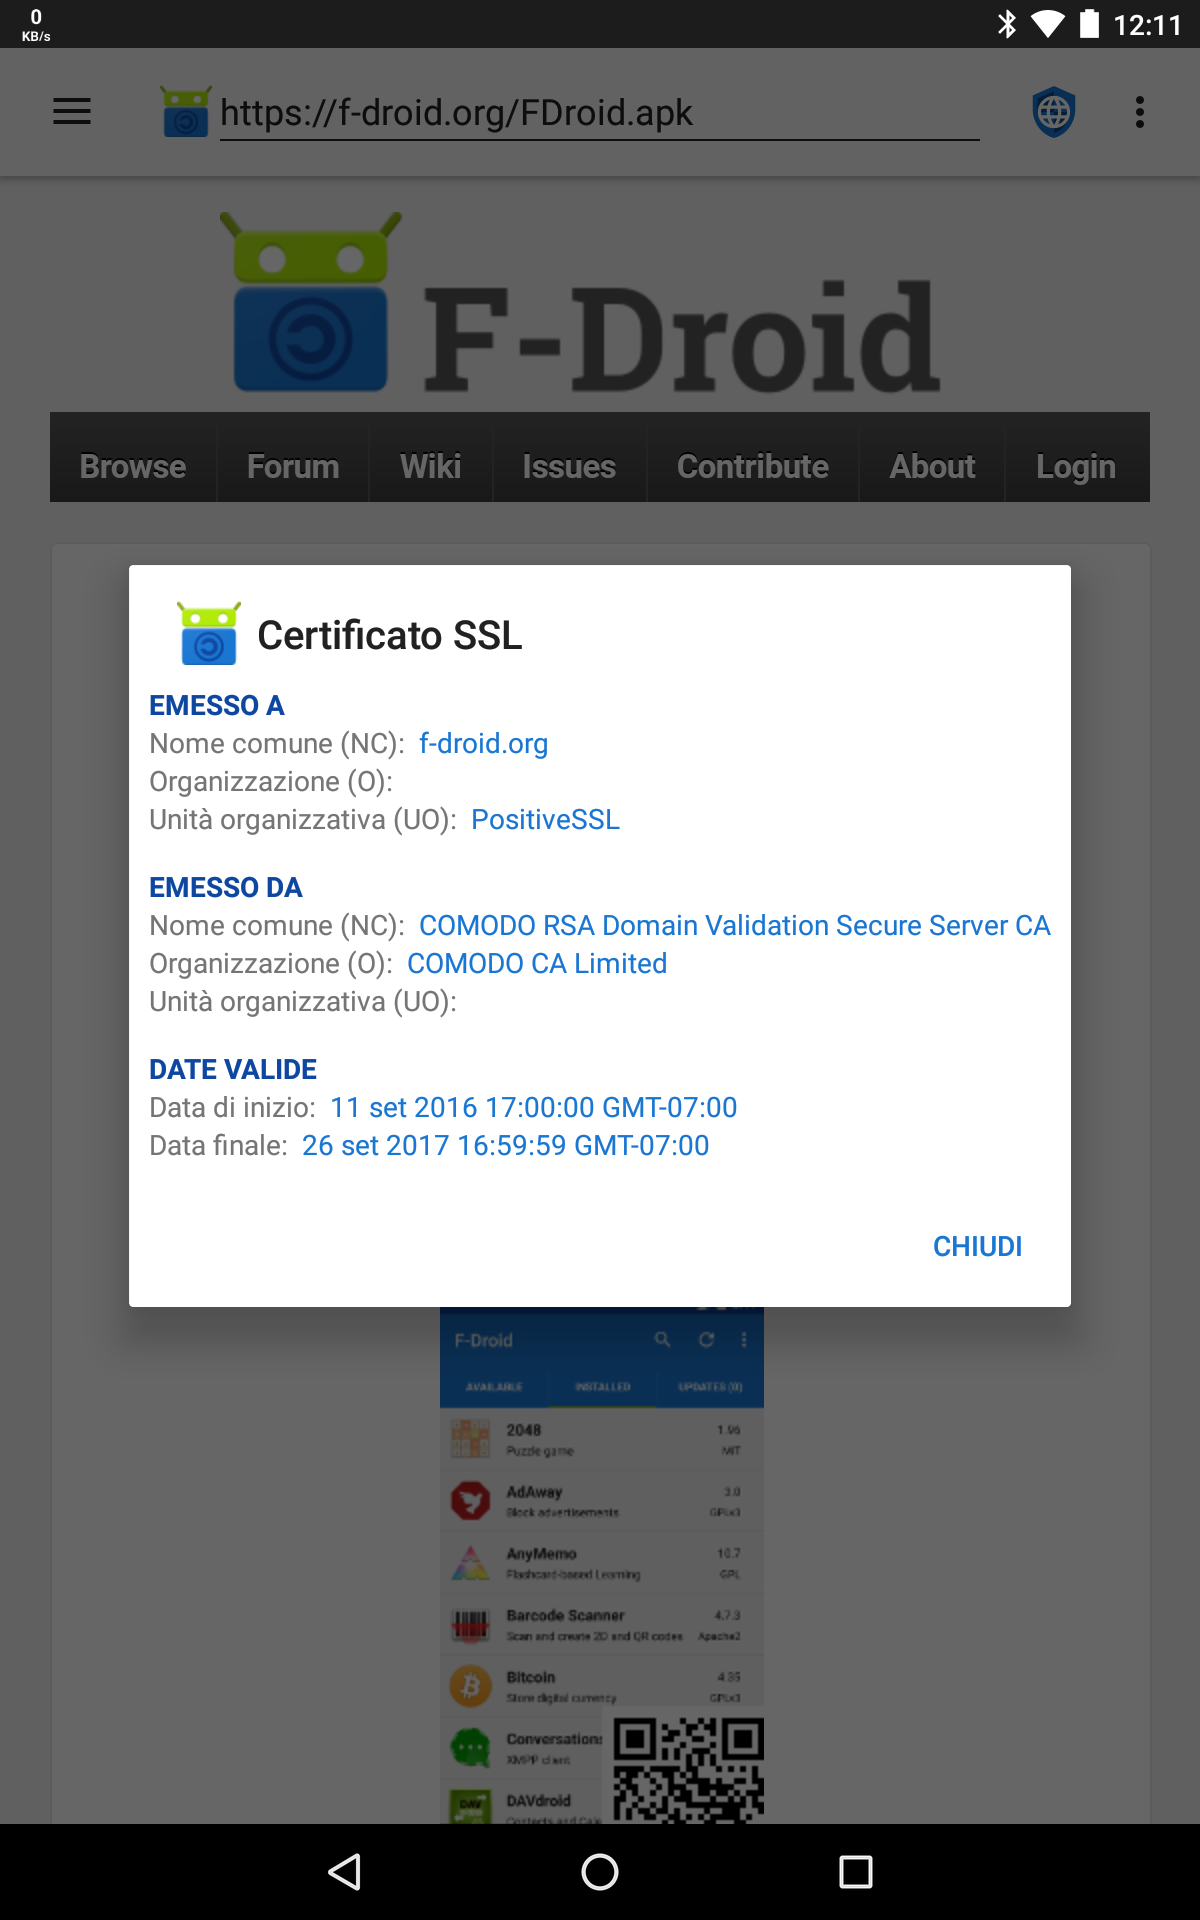 fastlane/metadata/android/it/sevenInchScreenshots/01 - View SSL Certificate.png